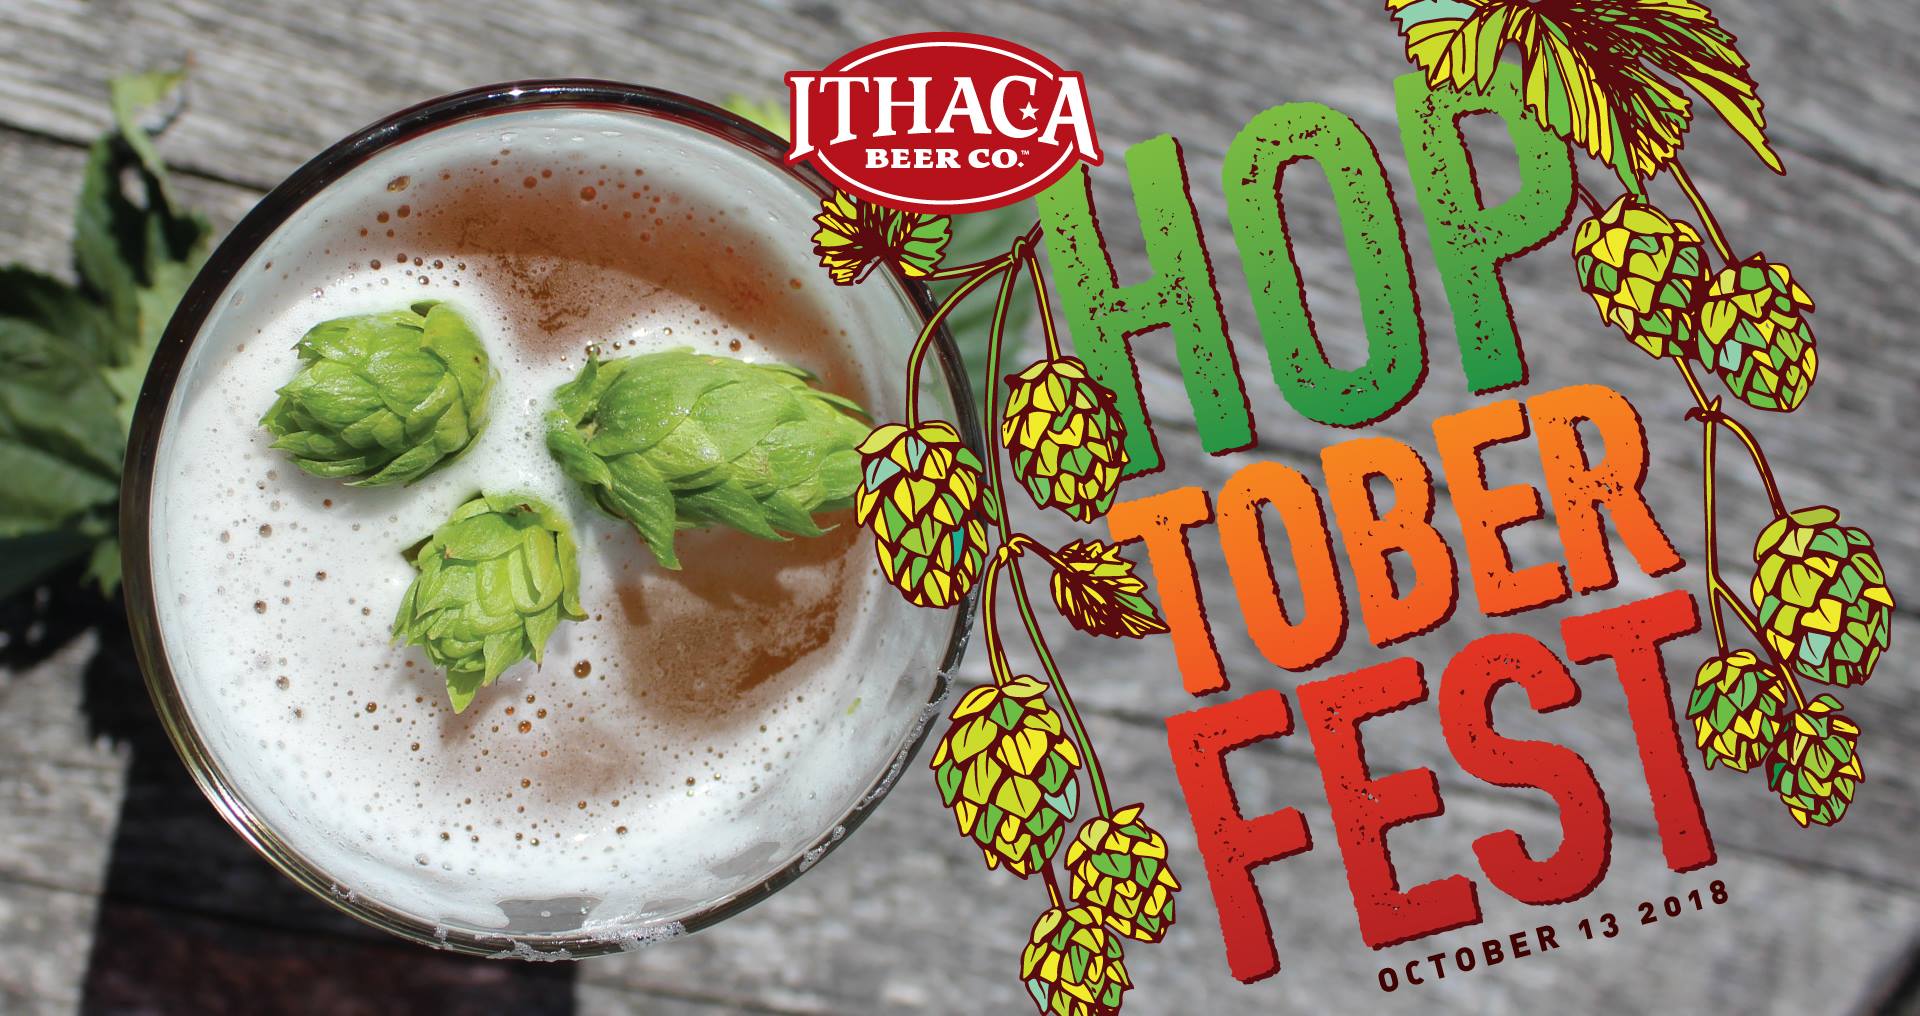 Ithaca Beer Co. Hoptoberfest banner image